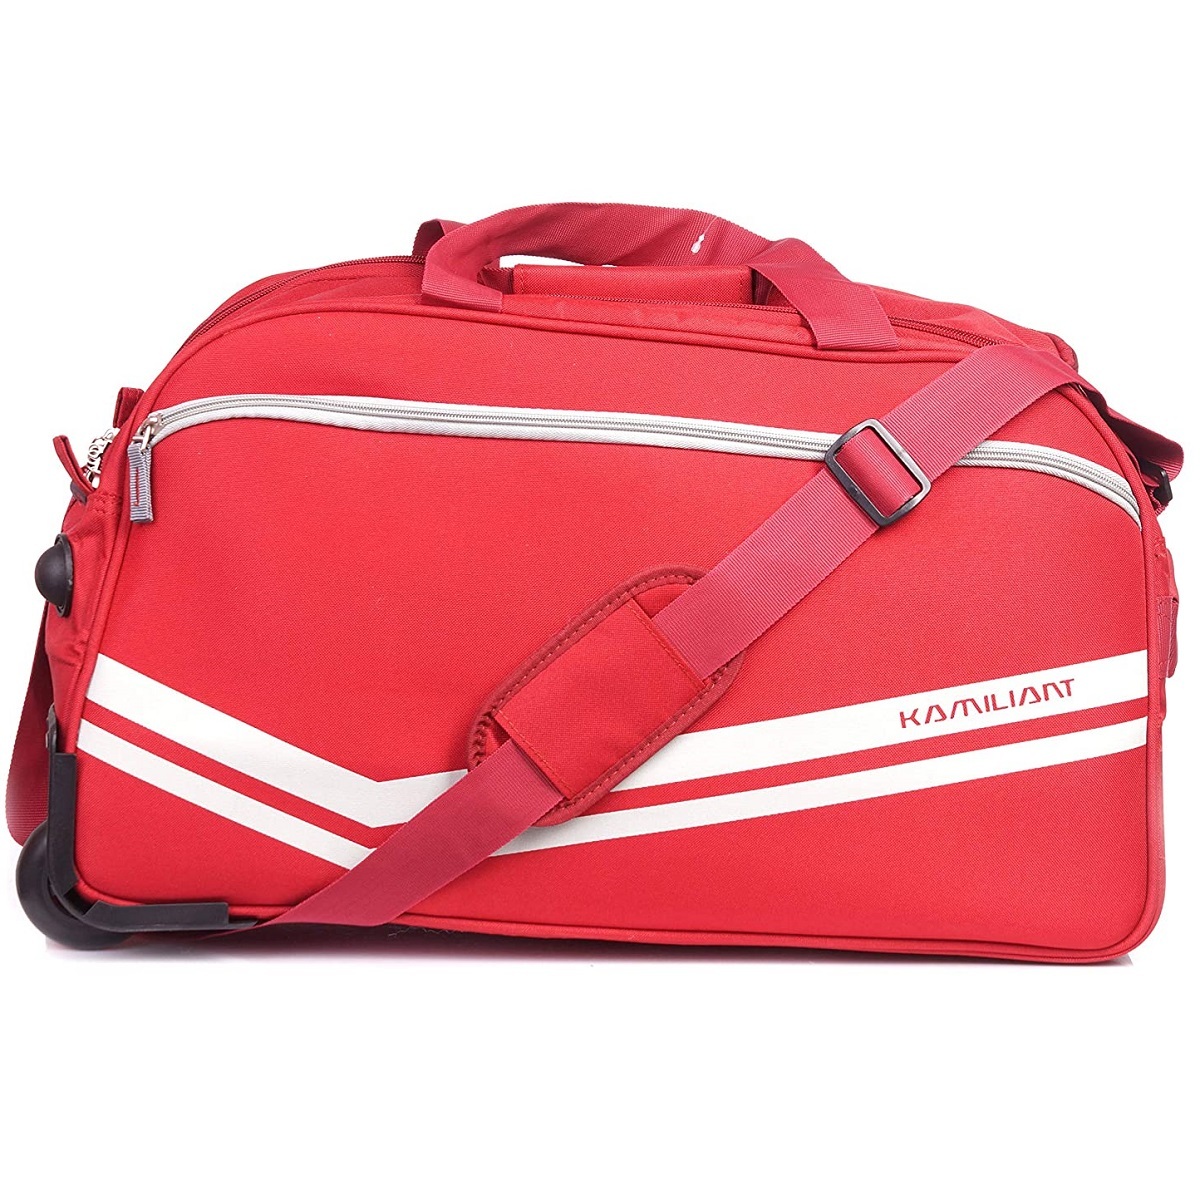 Kamiliant Wheeled Duffled Bag Zoro 52cm Red